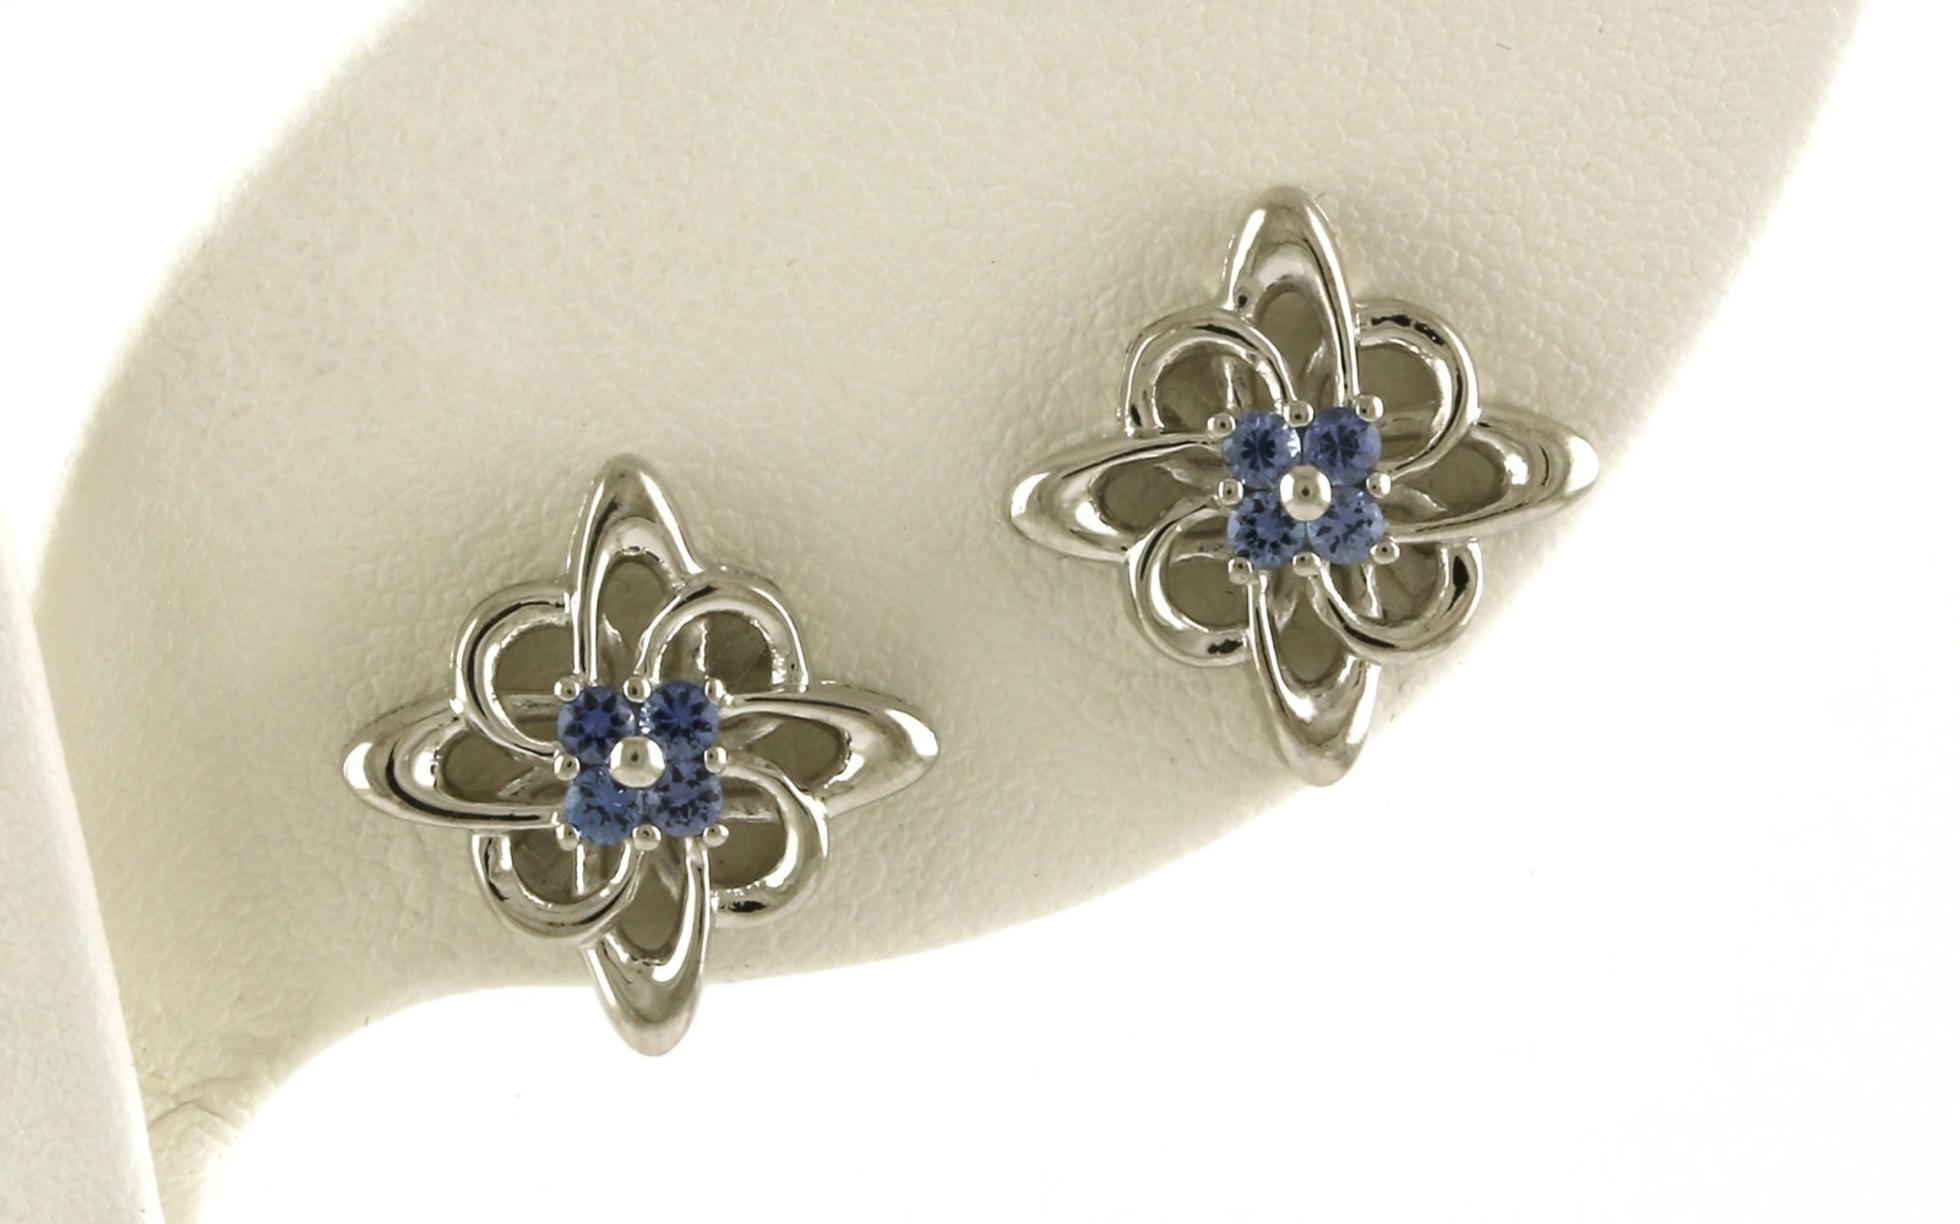 4-Stone Cluster Swirl Flower Montana Yogo Sapphire Stud Earrings in Sterling Silver (0.24cts TWT)